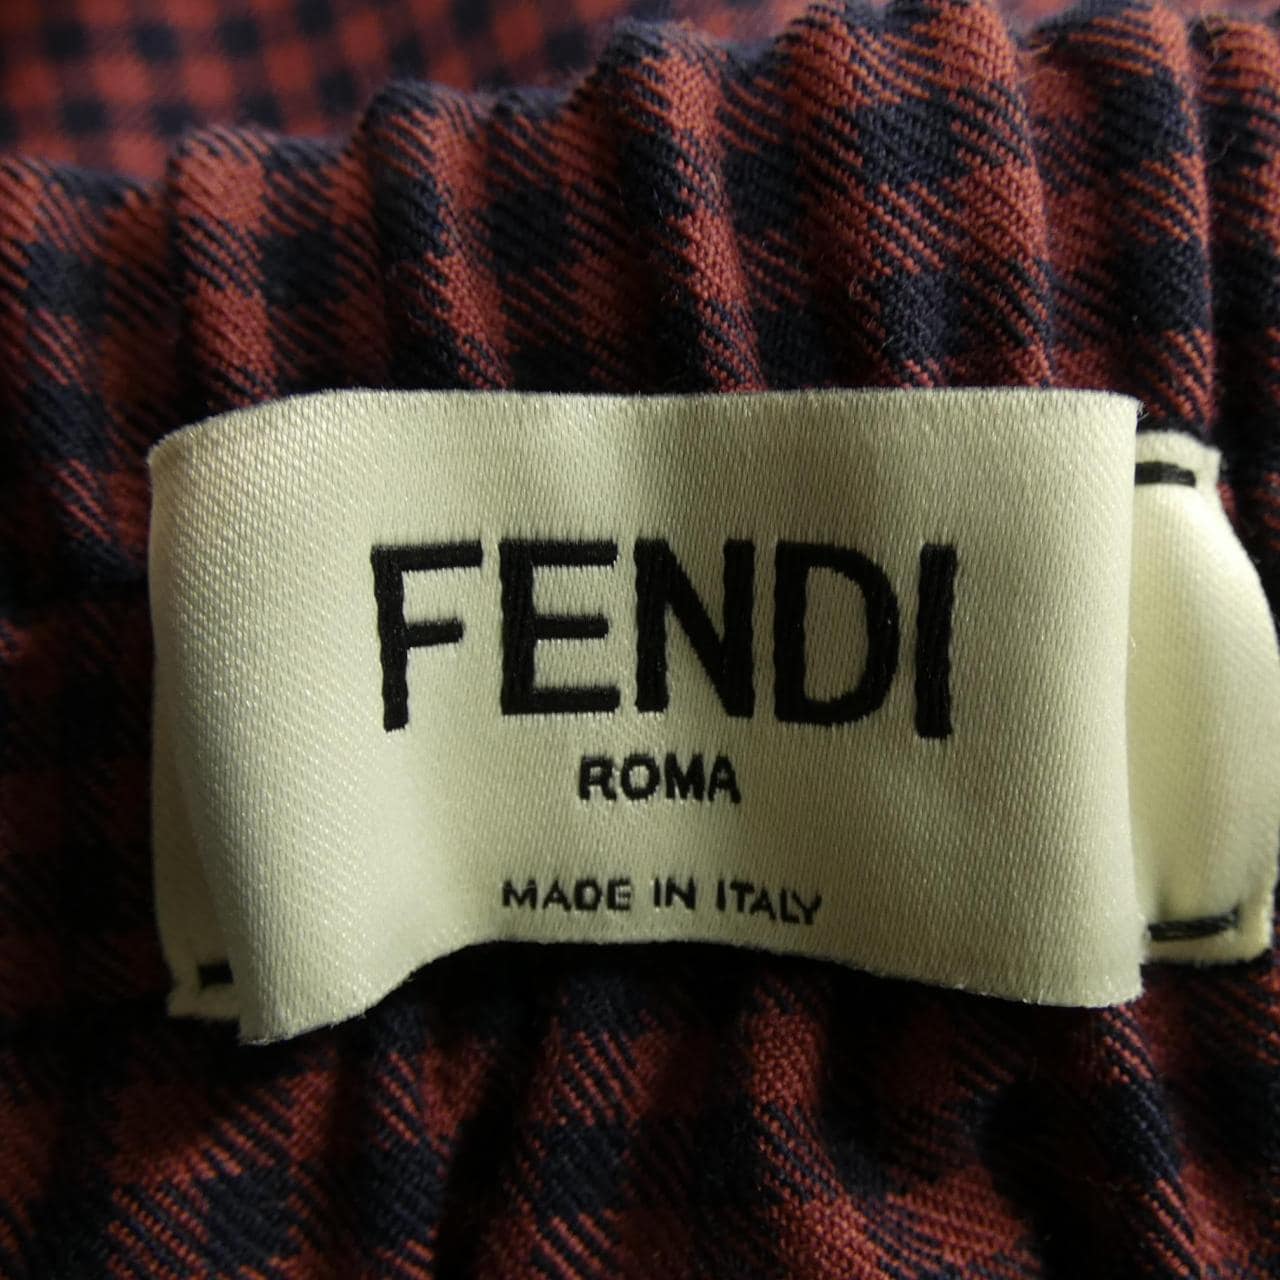 FENDI shorts